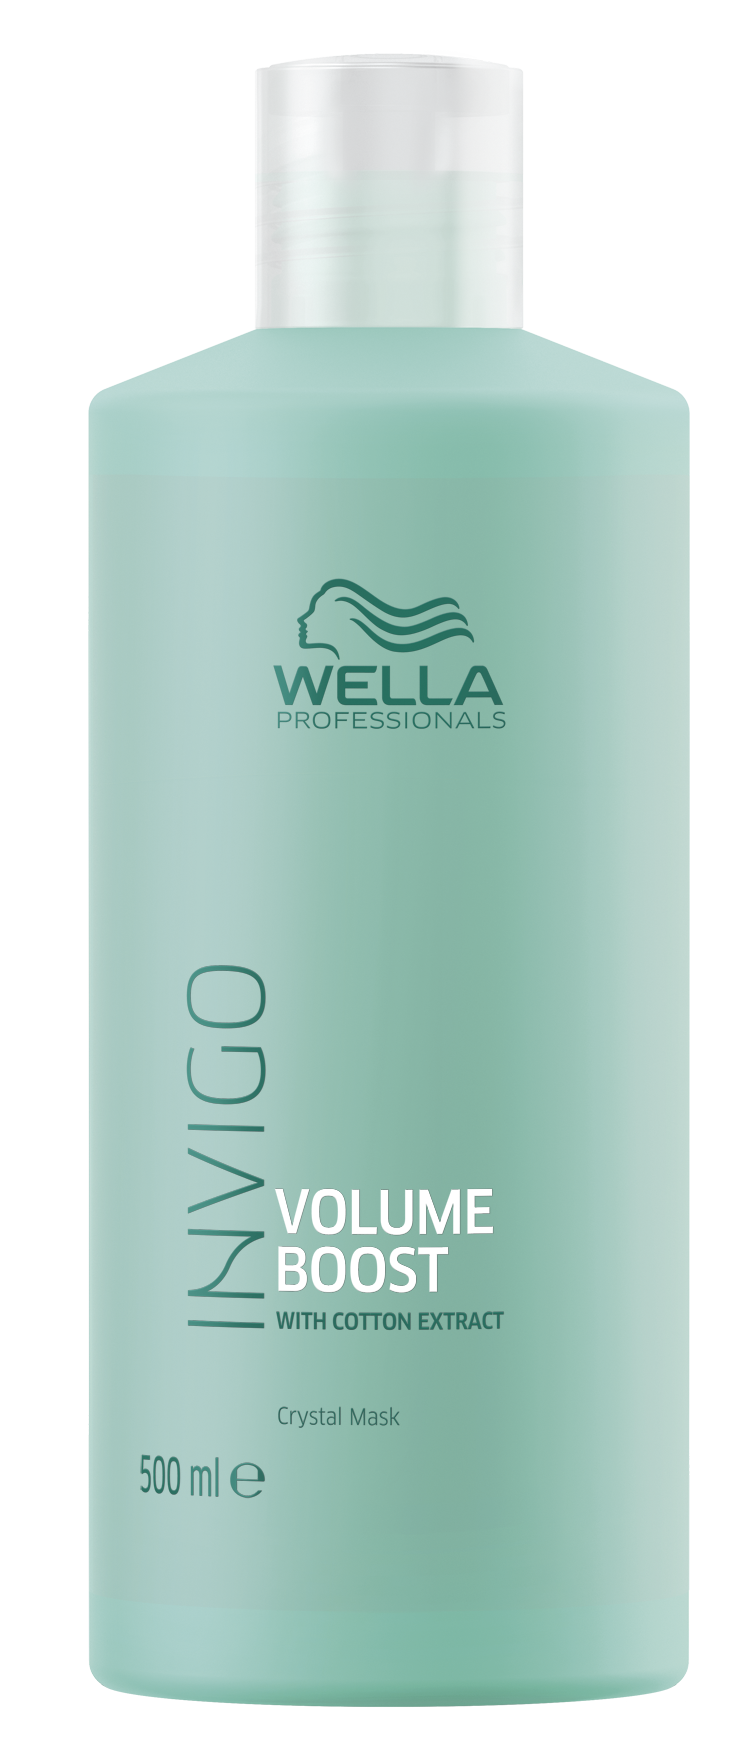 WELLA PROFESSIONALS Маска-кристалл уплотняющая / Volume Boost 500 мл wella volume boost маска кристалл уплотняющая 500 мл